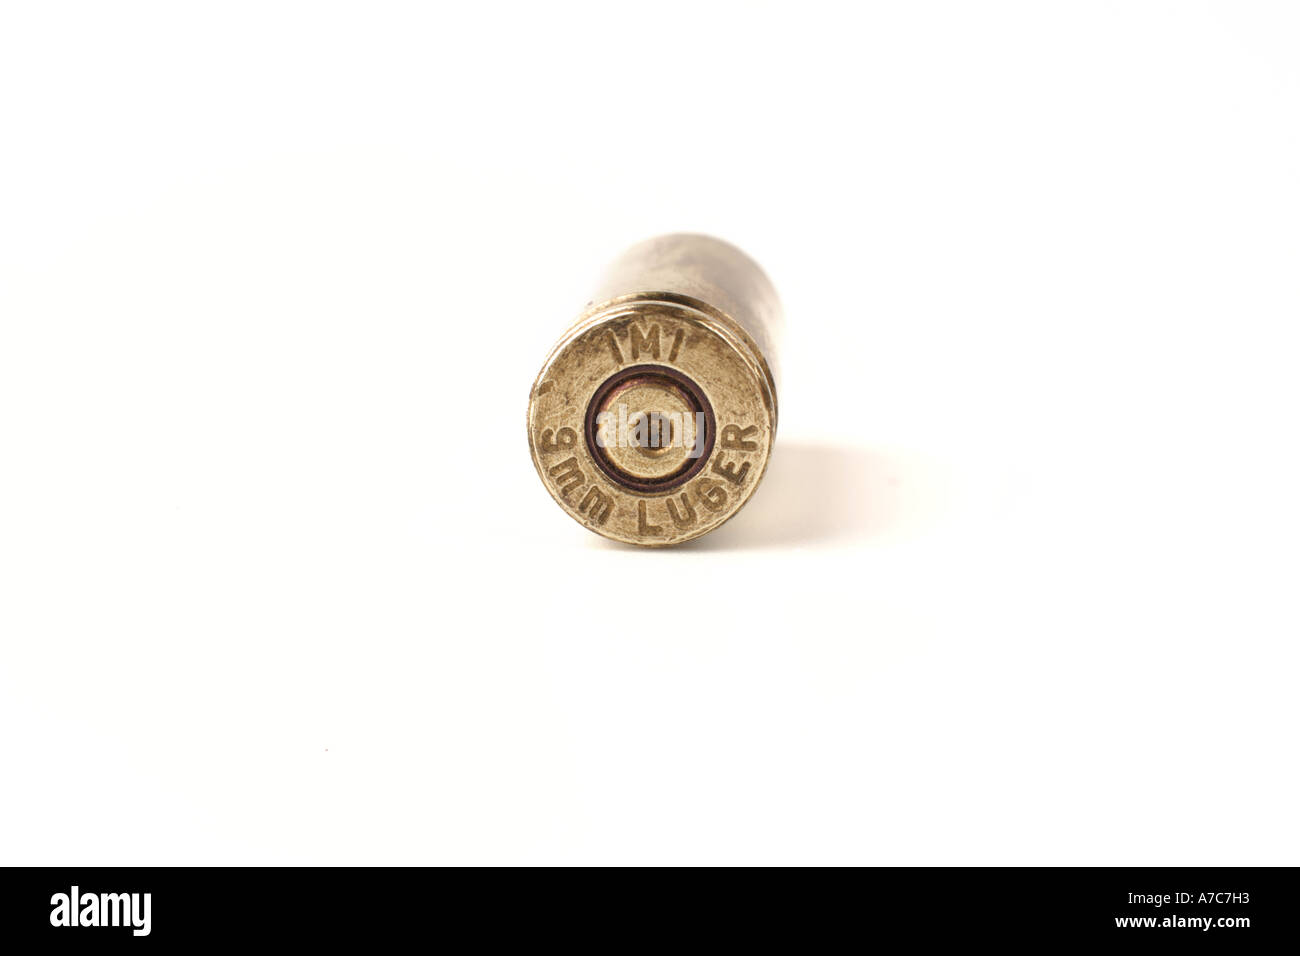 https://c8.alamy.com/comp/A7C7H3/luger-9mm-fired-bullet-shell-case-A7C7H3.jpg